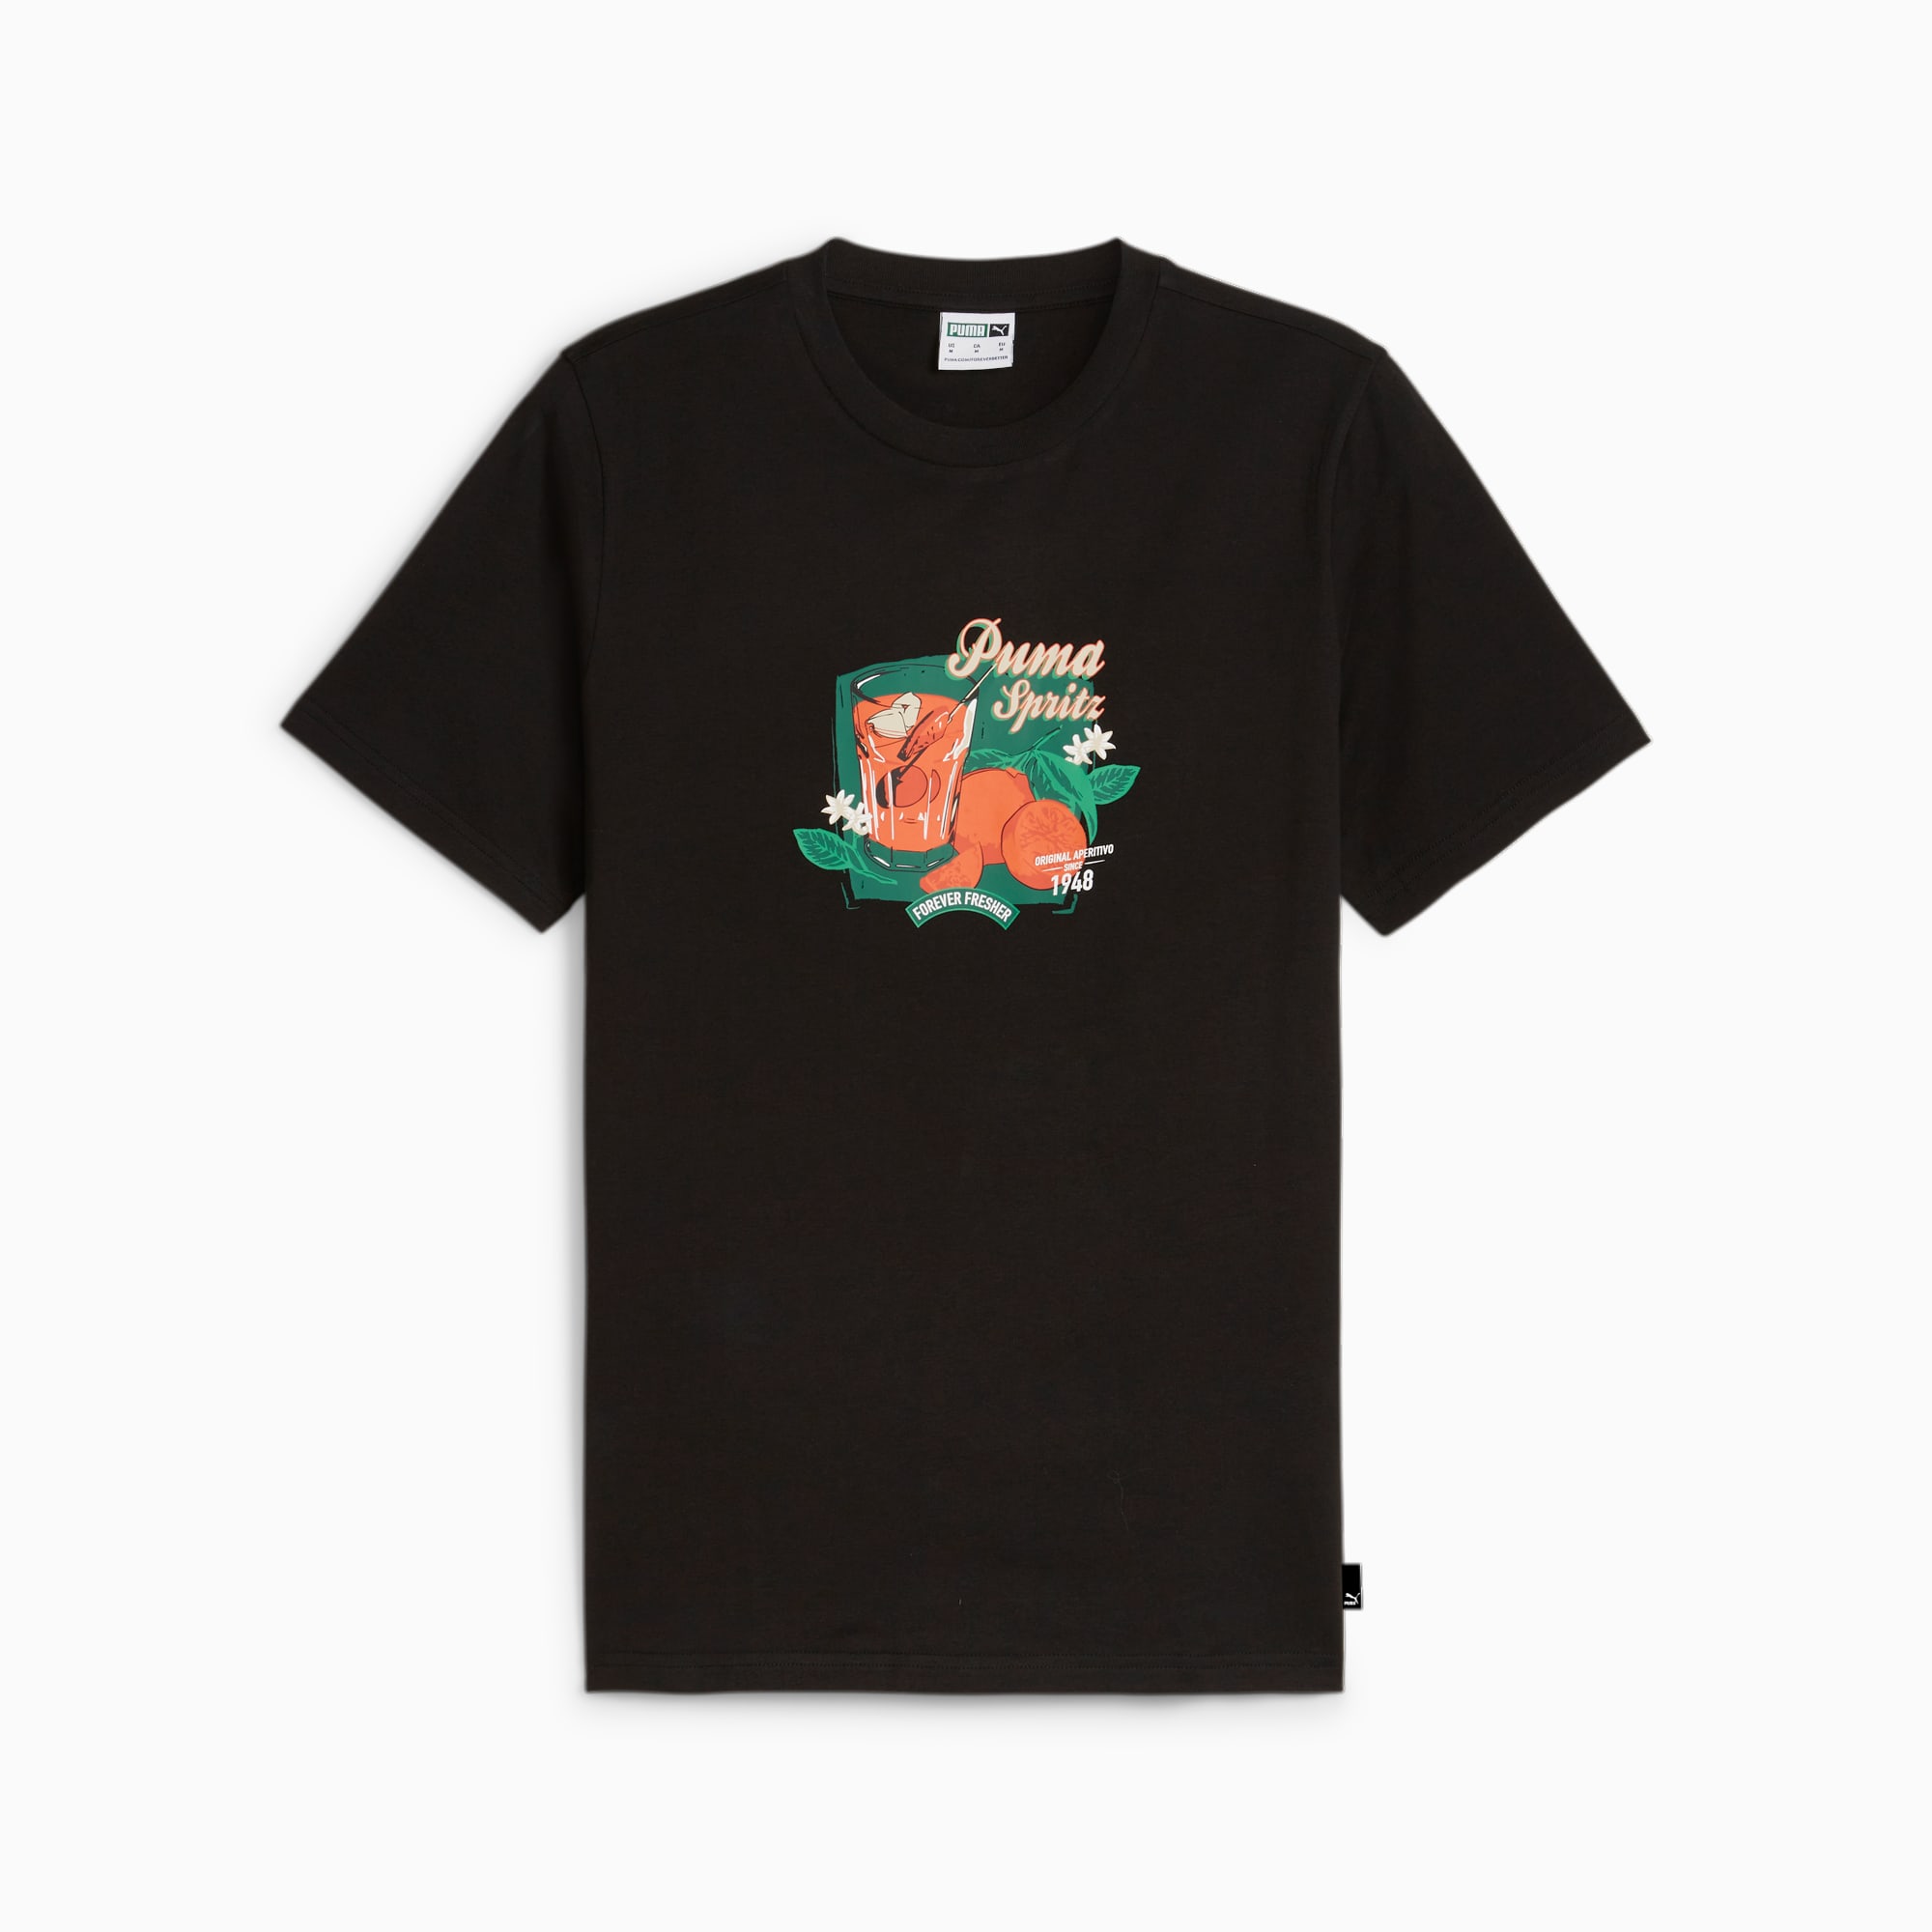 Graphics PUMA Spritz Men's T-Shirt, Black, Size XL, Clothing